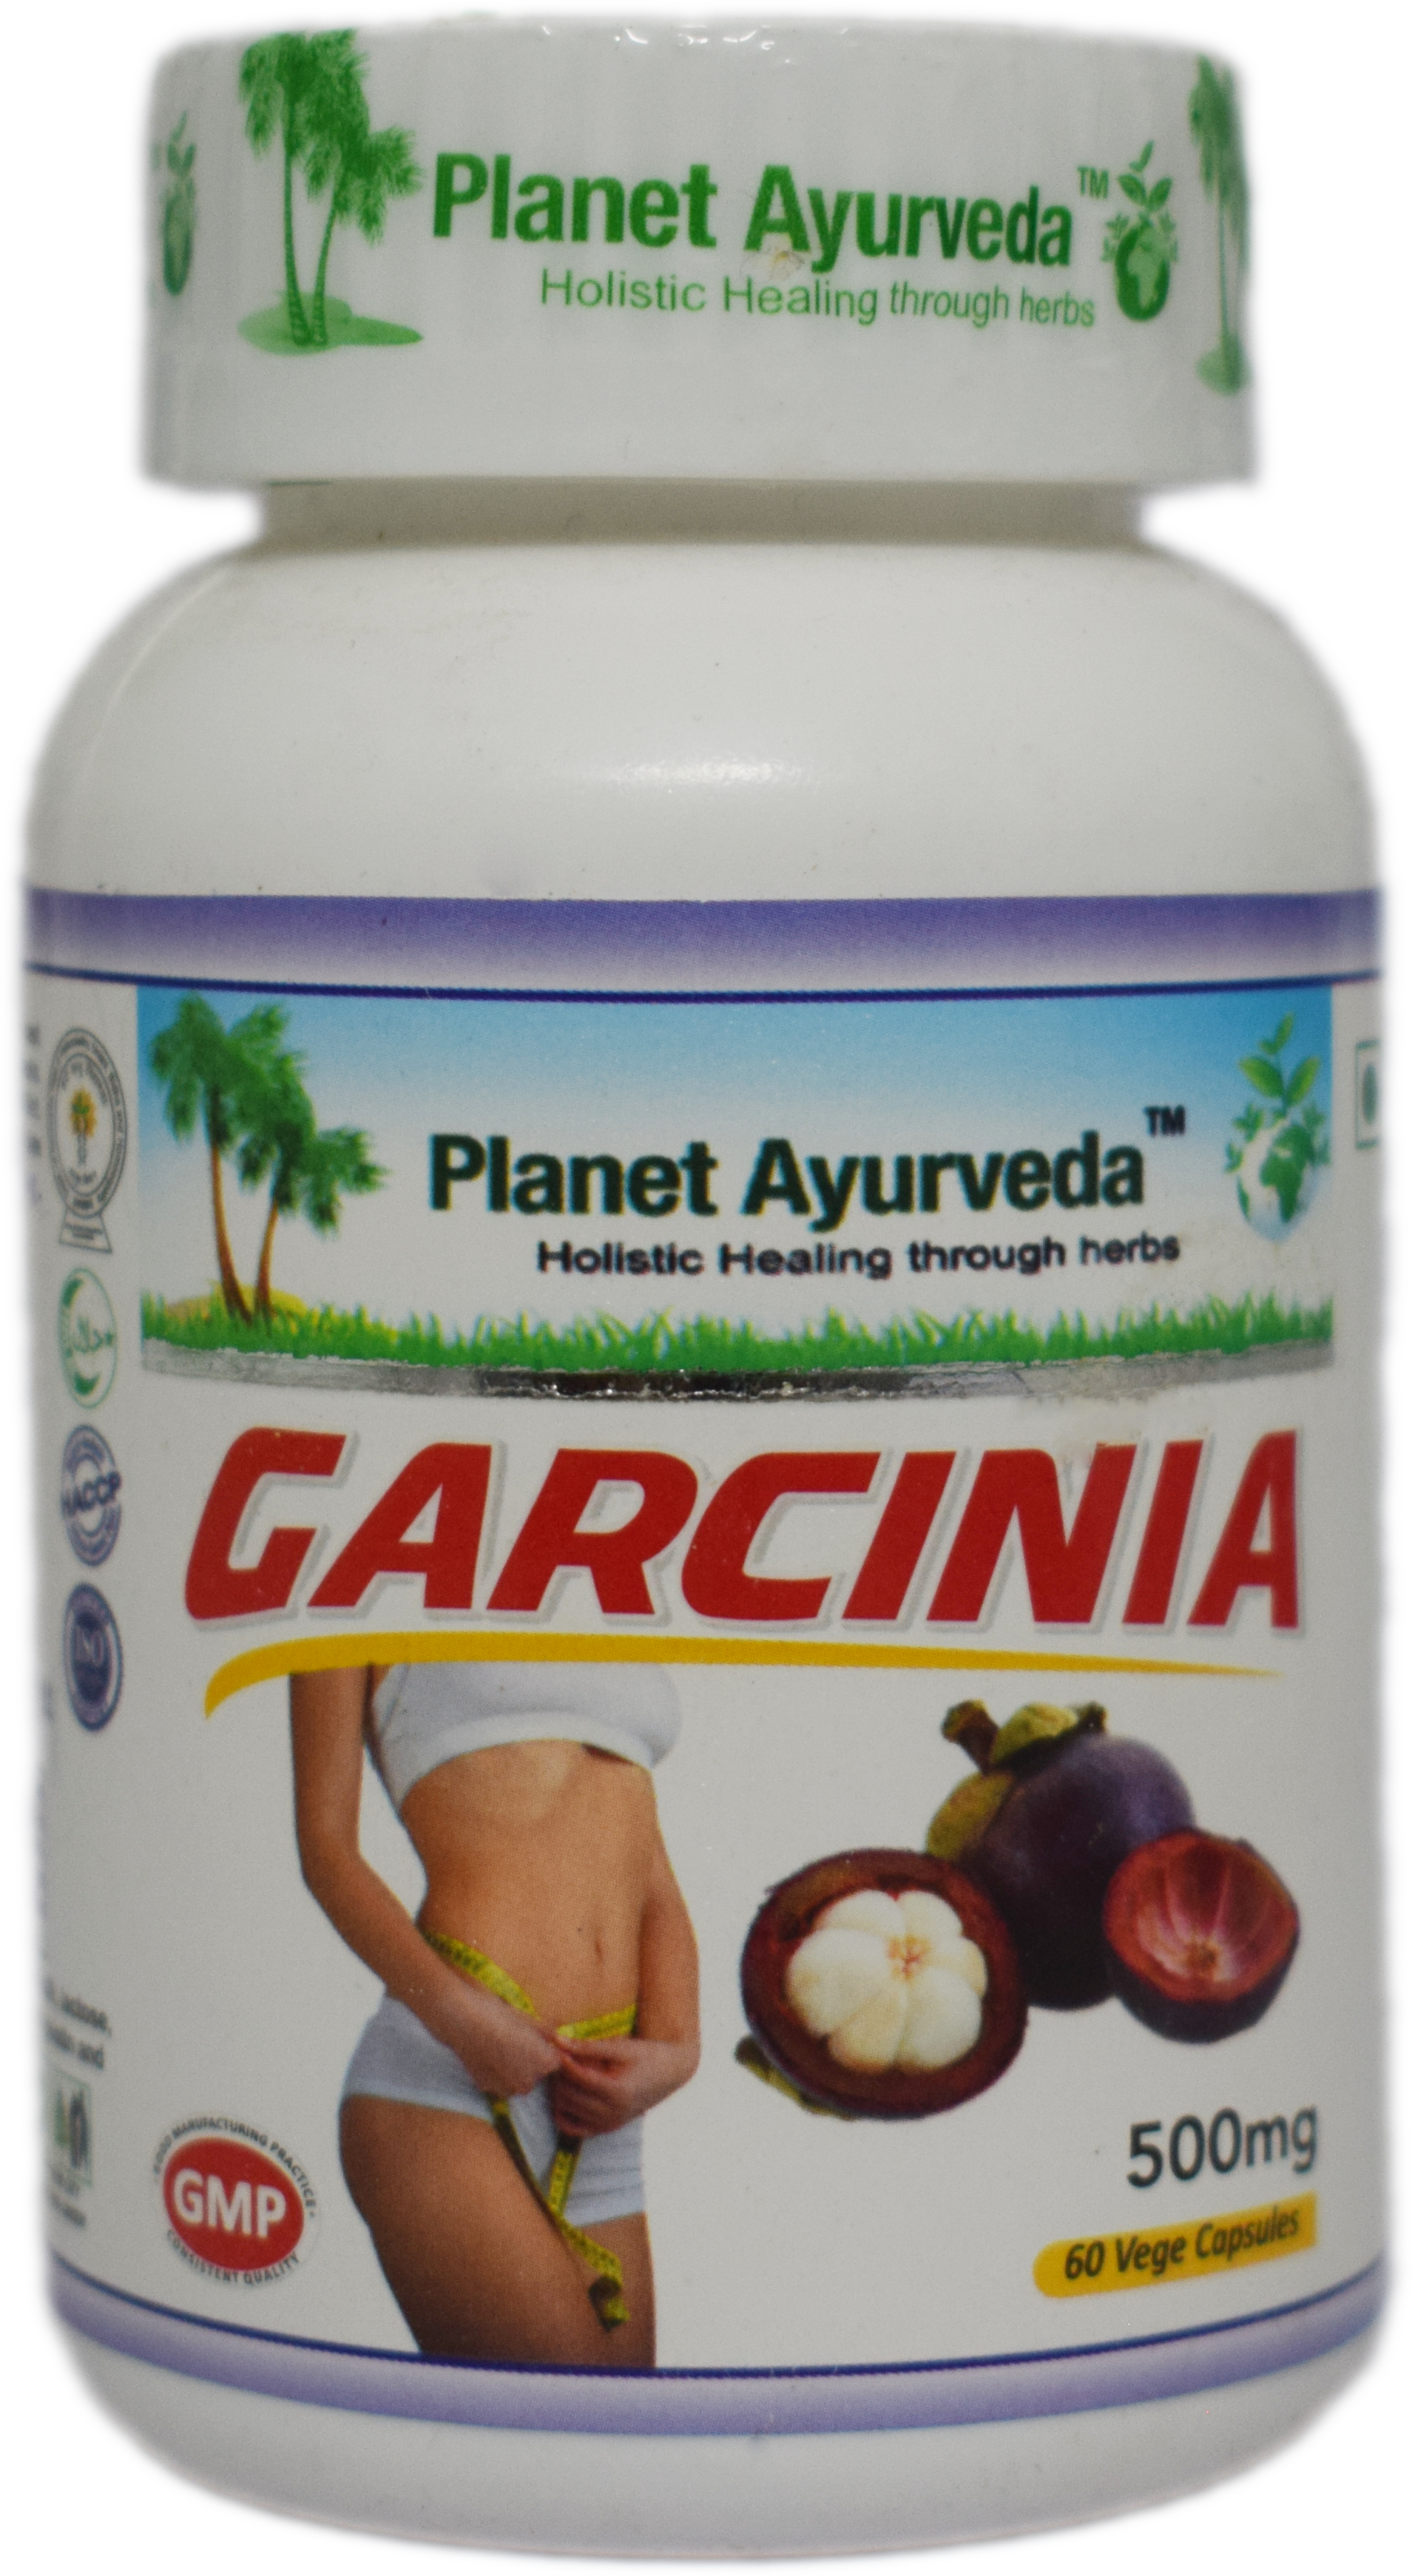 Buy Planet Ayurveda Garcinia Capsules at Best Price Online